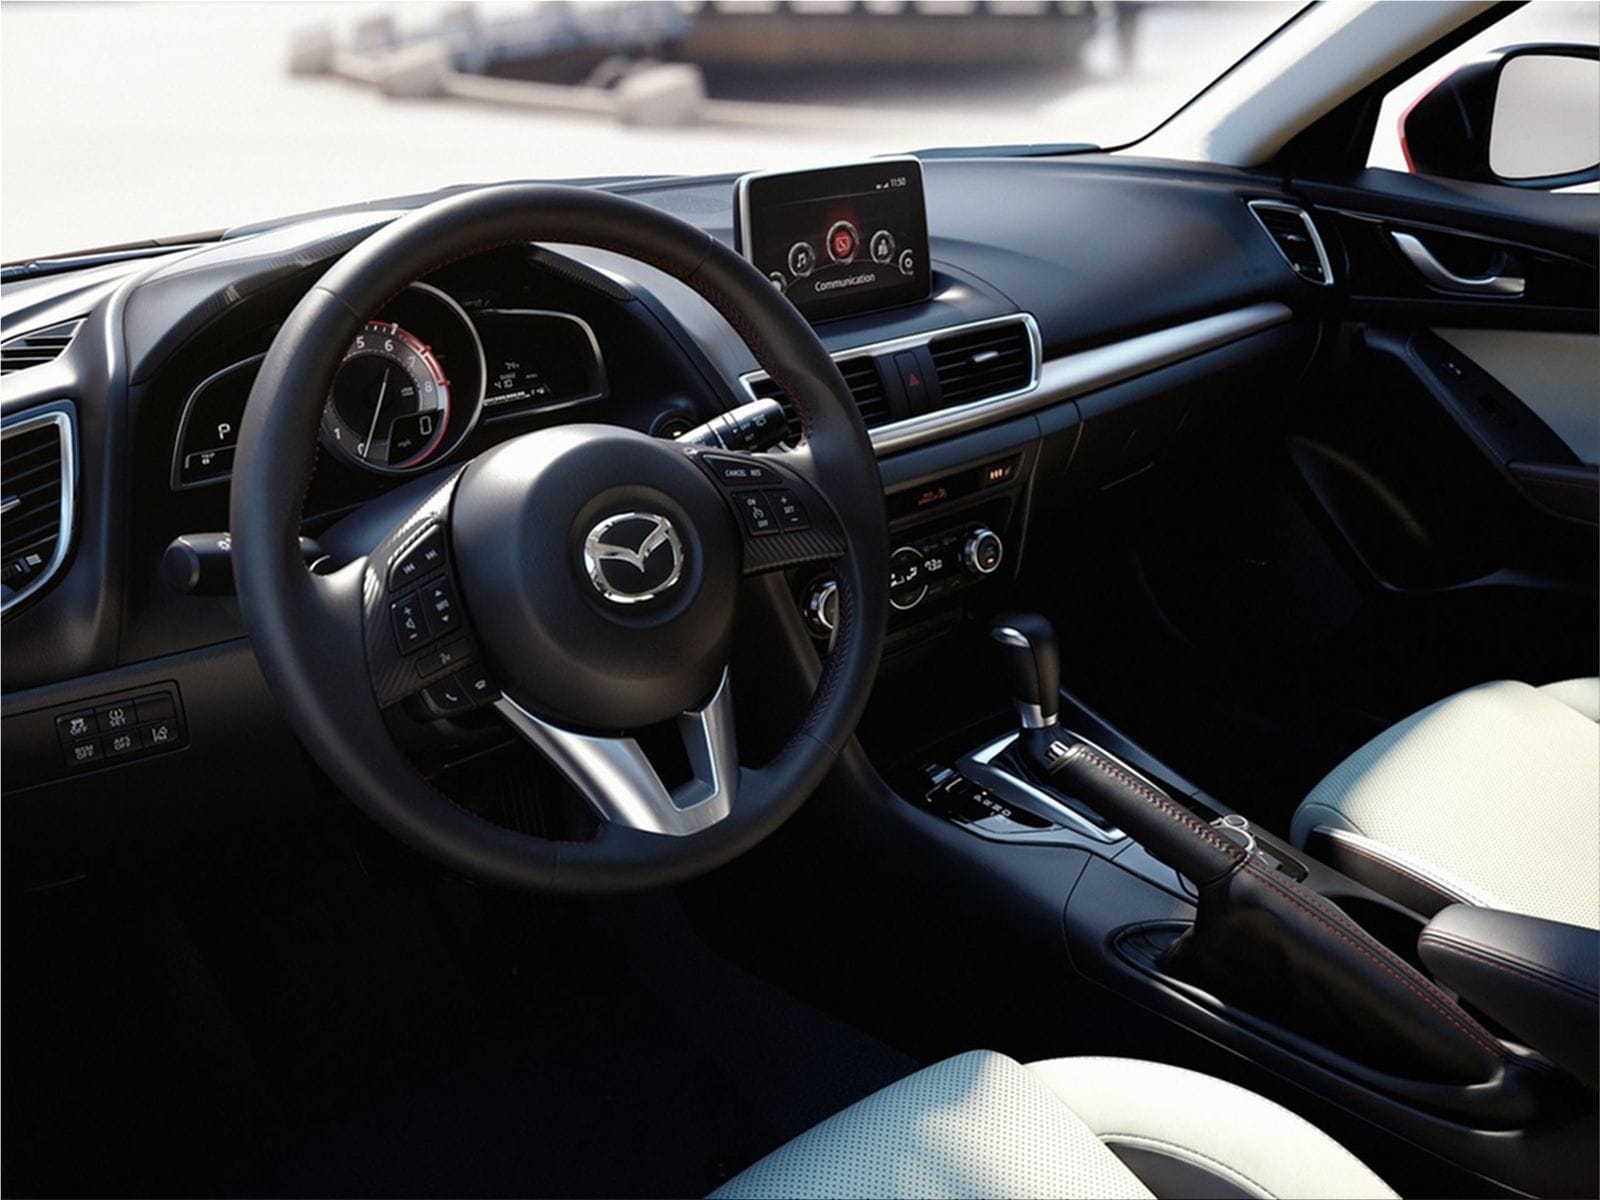 2014 Mazda 3 redesigned hatchback|Mazda